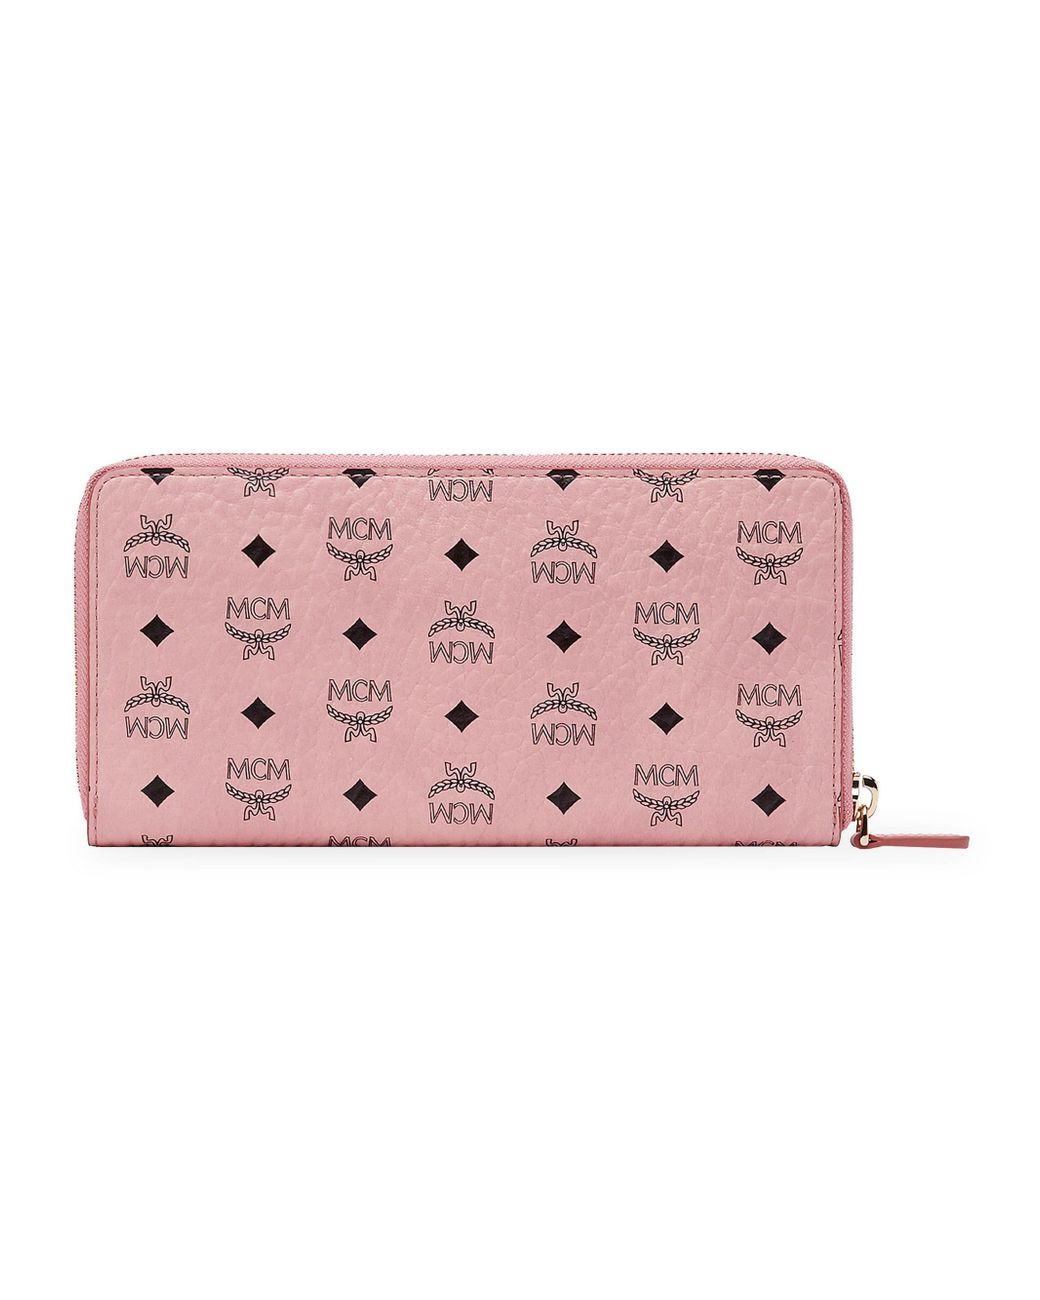 MCM Large Visetos Original Leather Zip-around Wallet in Pink | Lyst